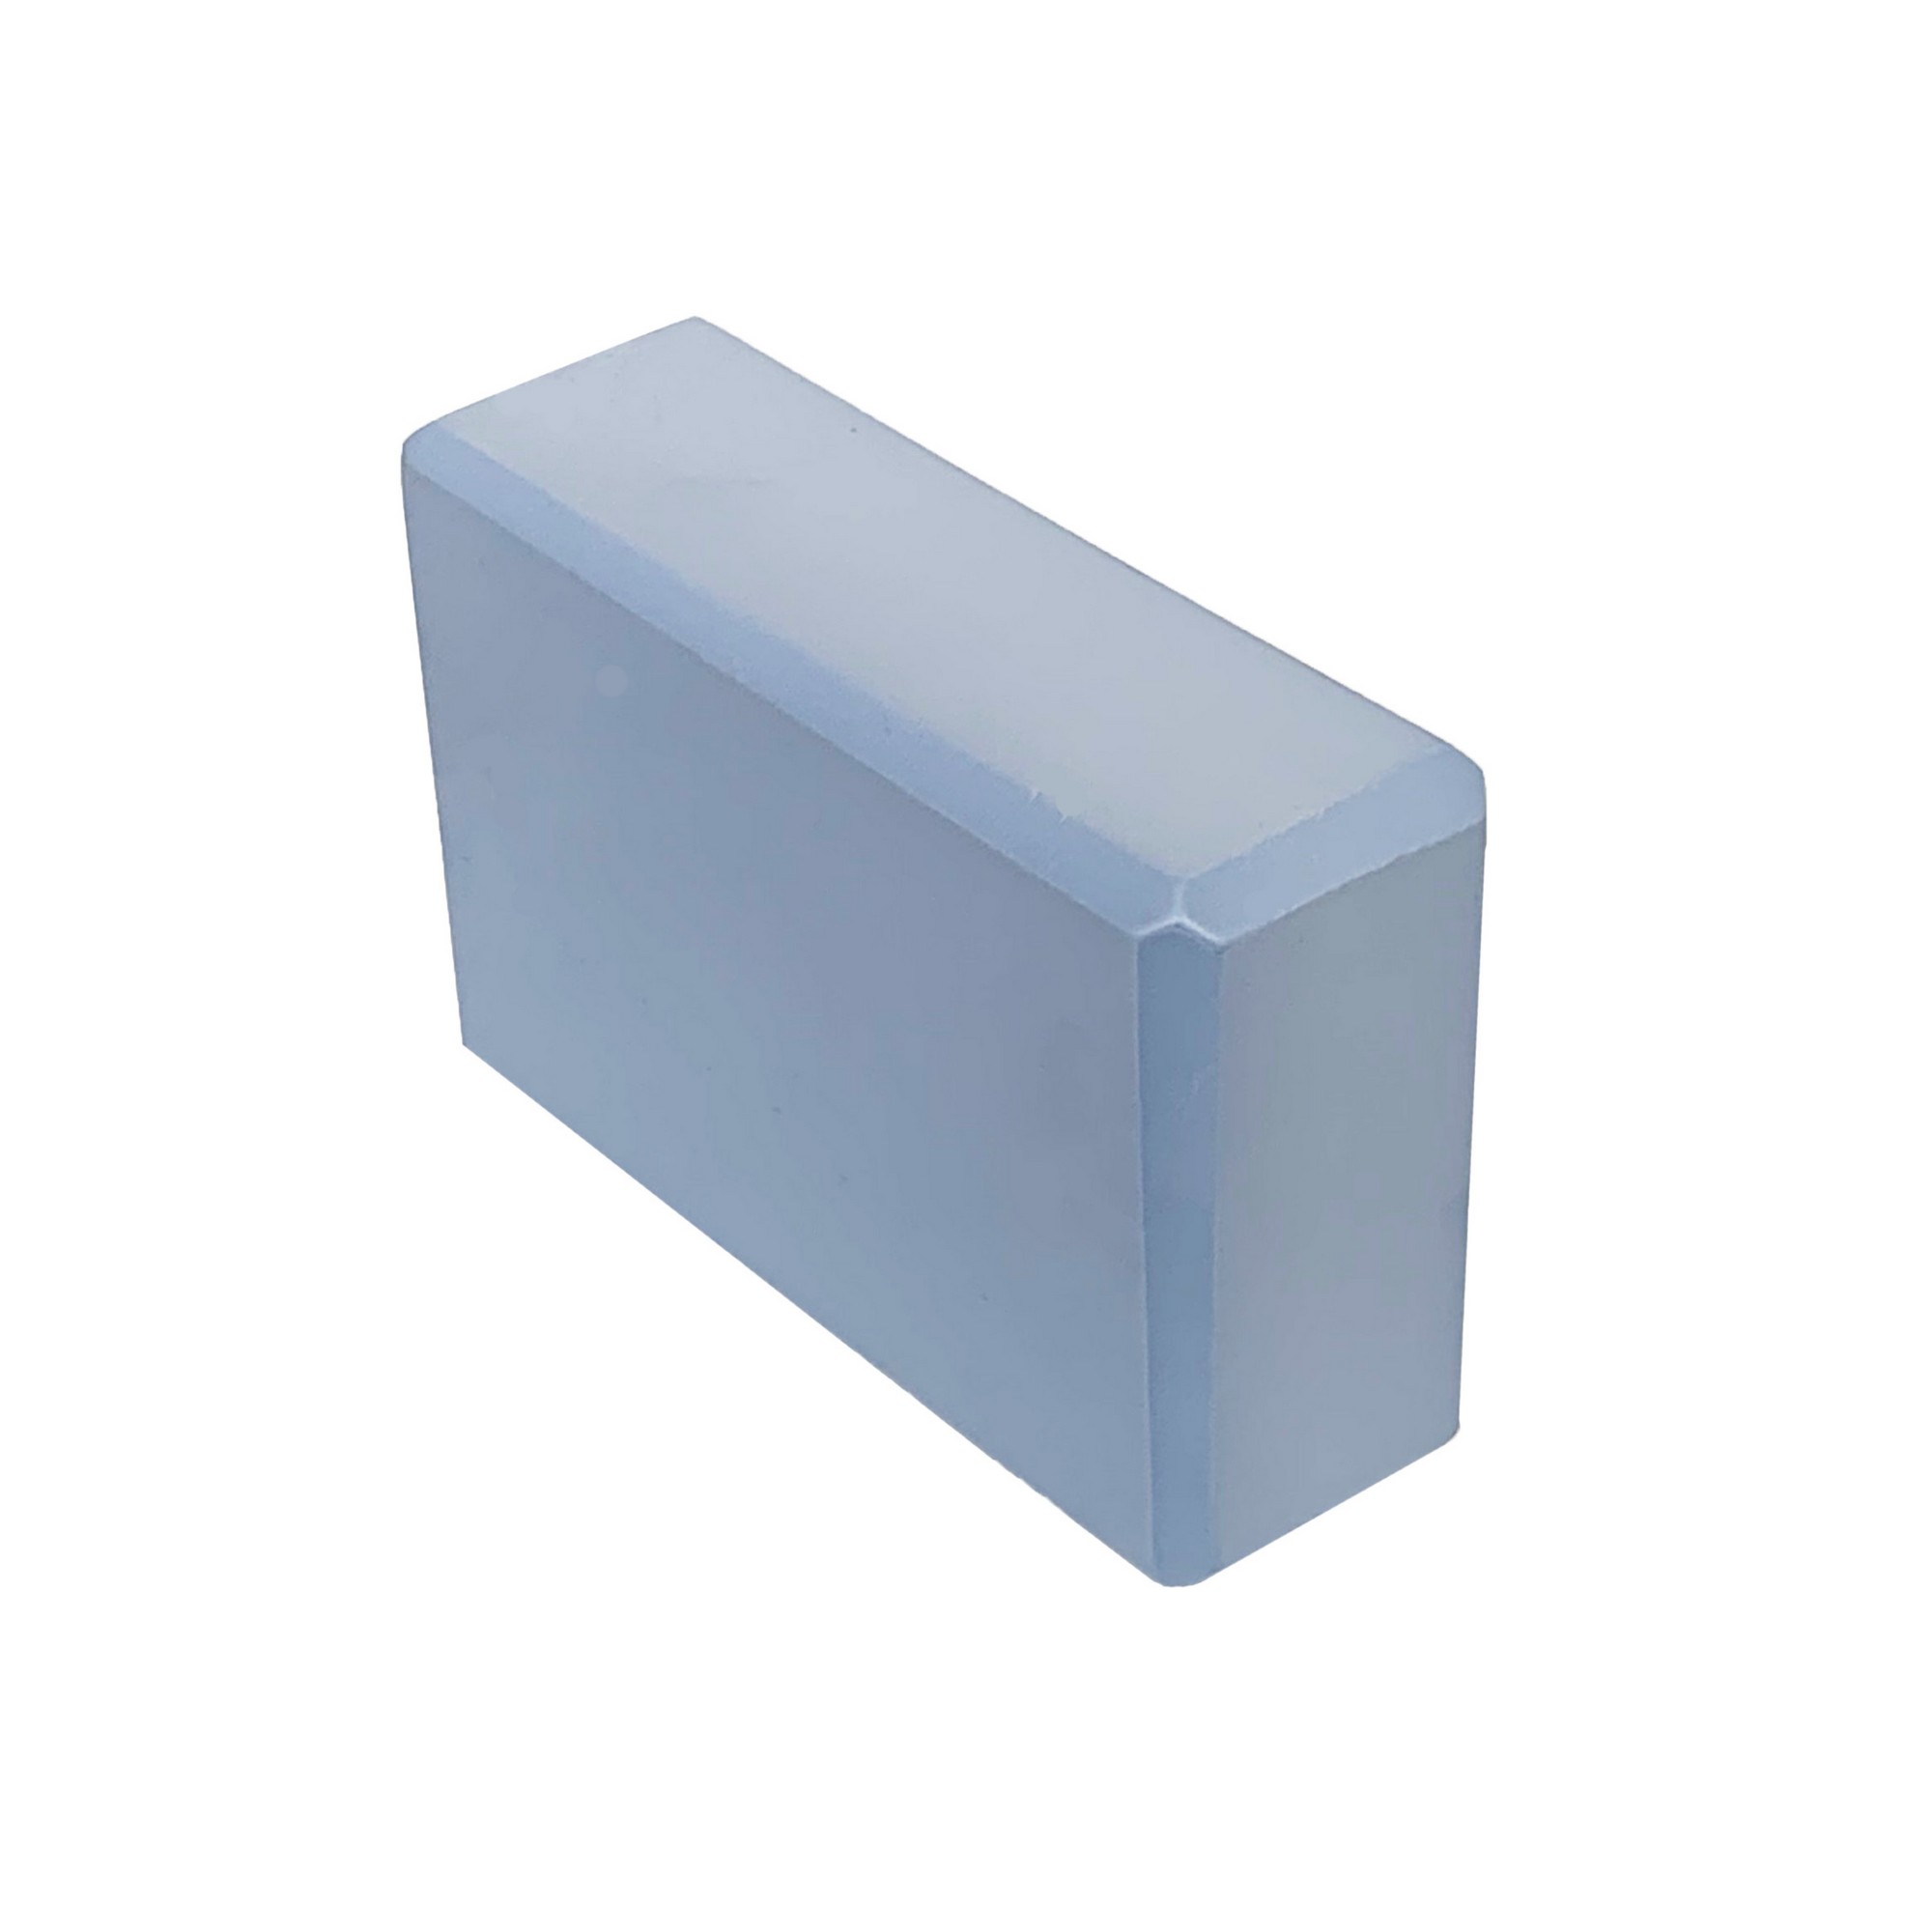 Йога блок Sportex полумягкий, из вспененного ЭВА 22,3х15х7,6 см E39131-30 голубой - фото 1